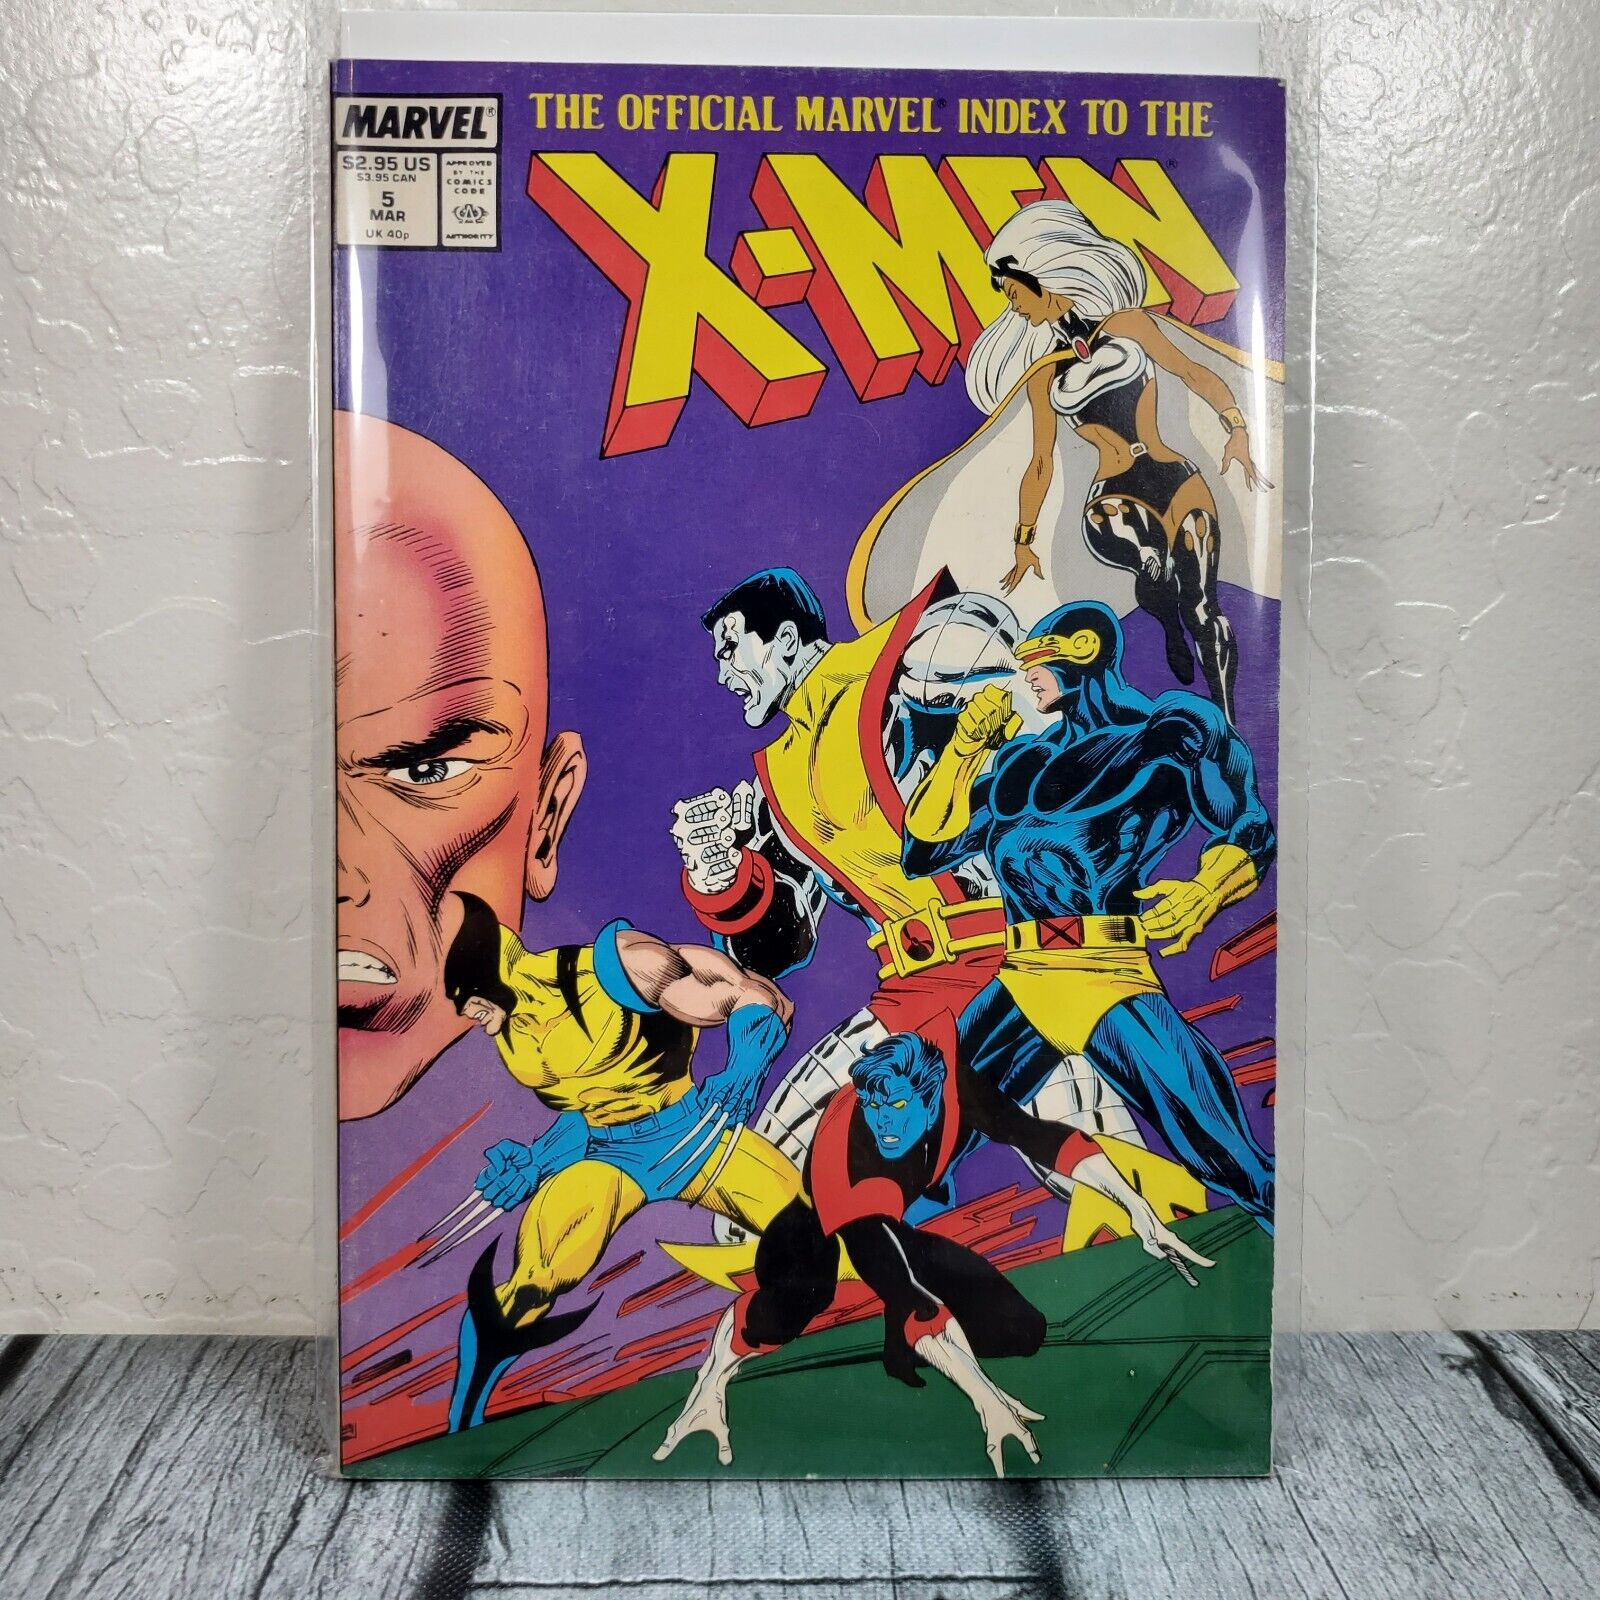 Official Marvel Index To The X-Men #5 1988 Vintage Marvel Comic Book, Sleeved